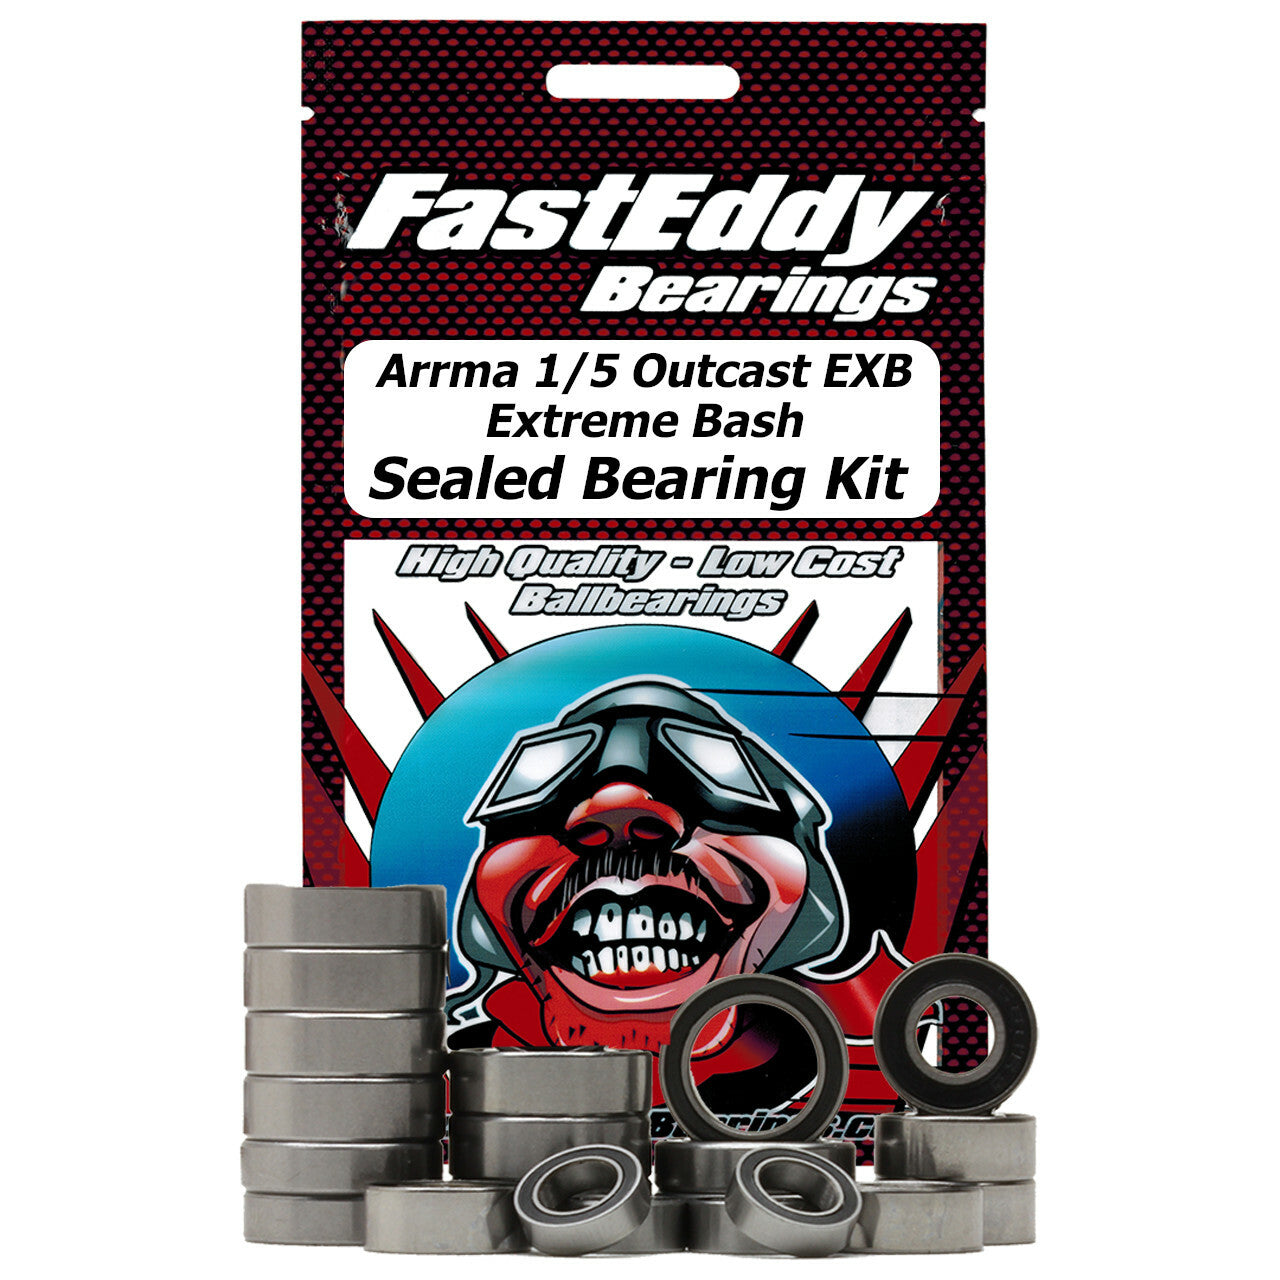 TFE7193 Fast Eddy Arrma 1/5 Outcast EXB Extreme Bash Sealed Bearing Kit